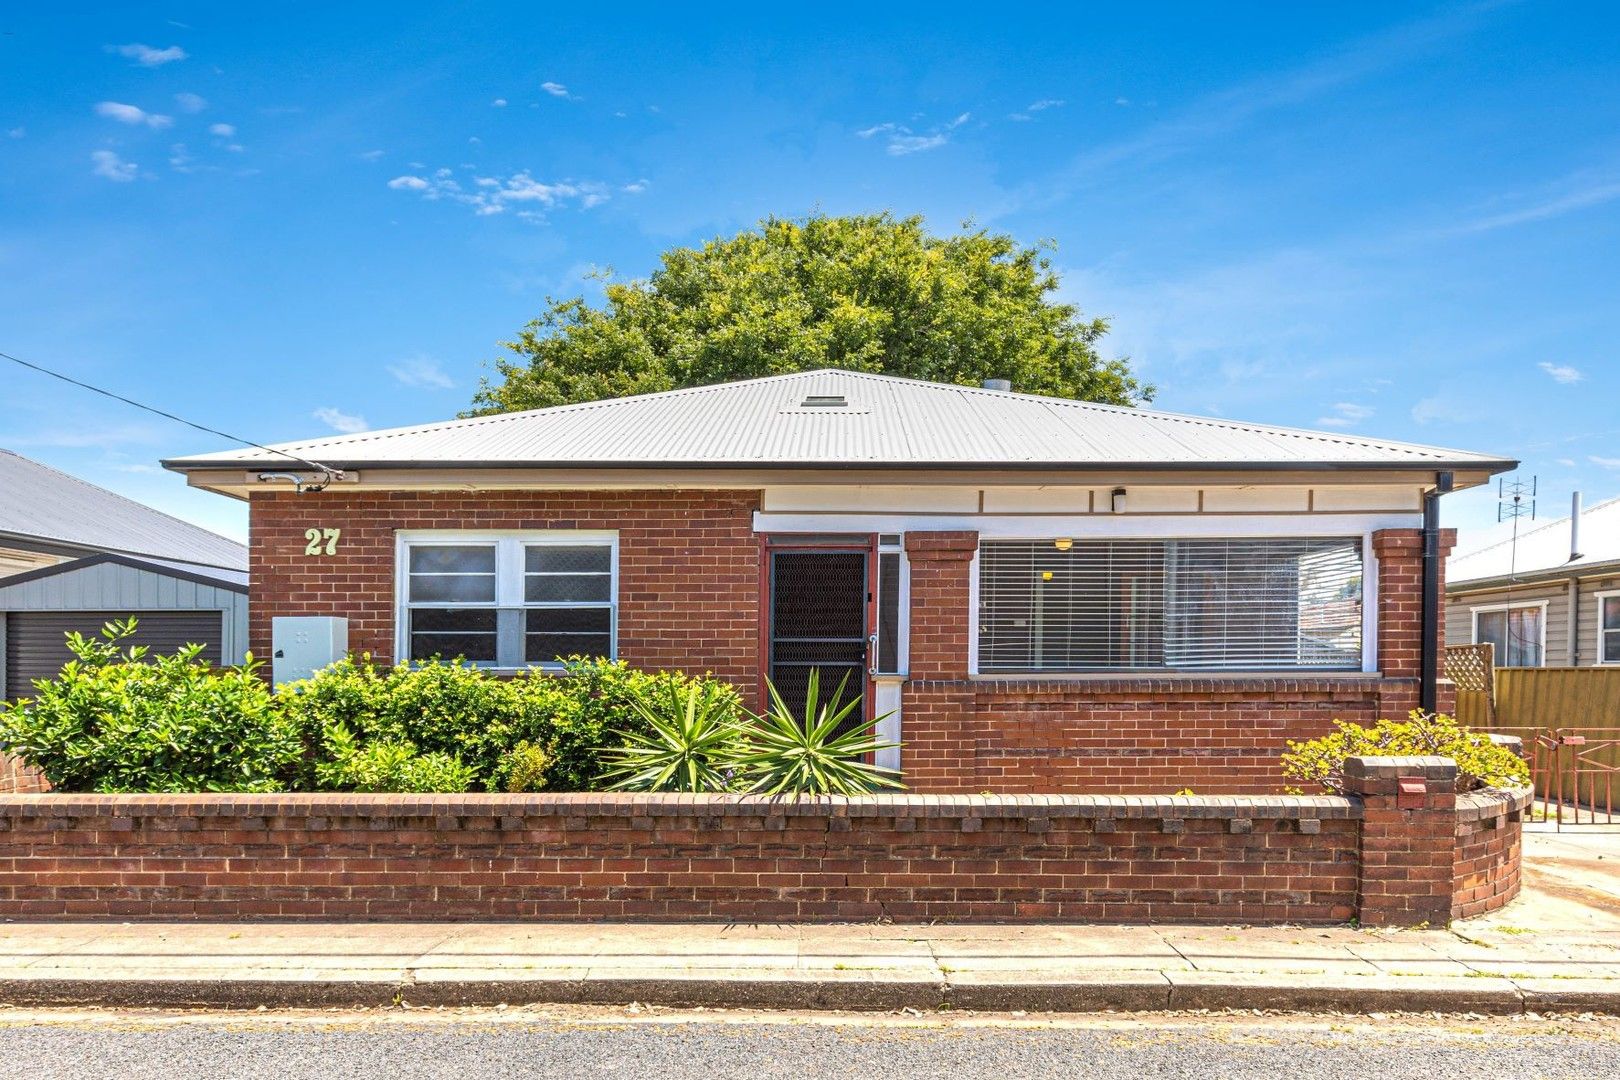 2 bedrooms House in 27 Scott Street CARRINGTON NSW, 2294